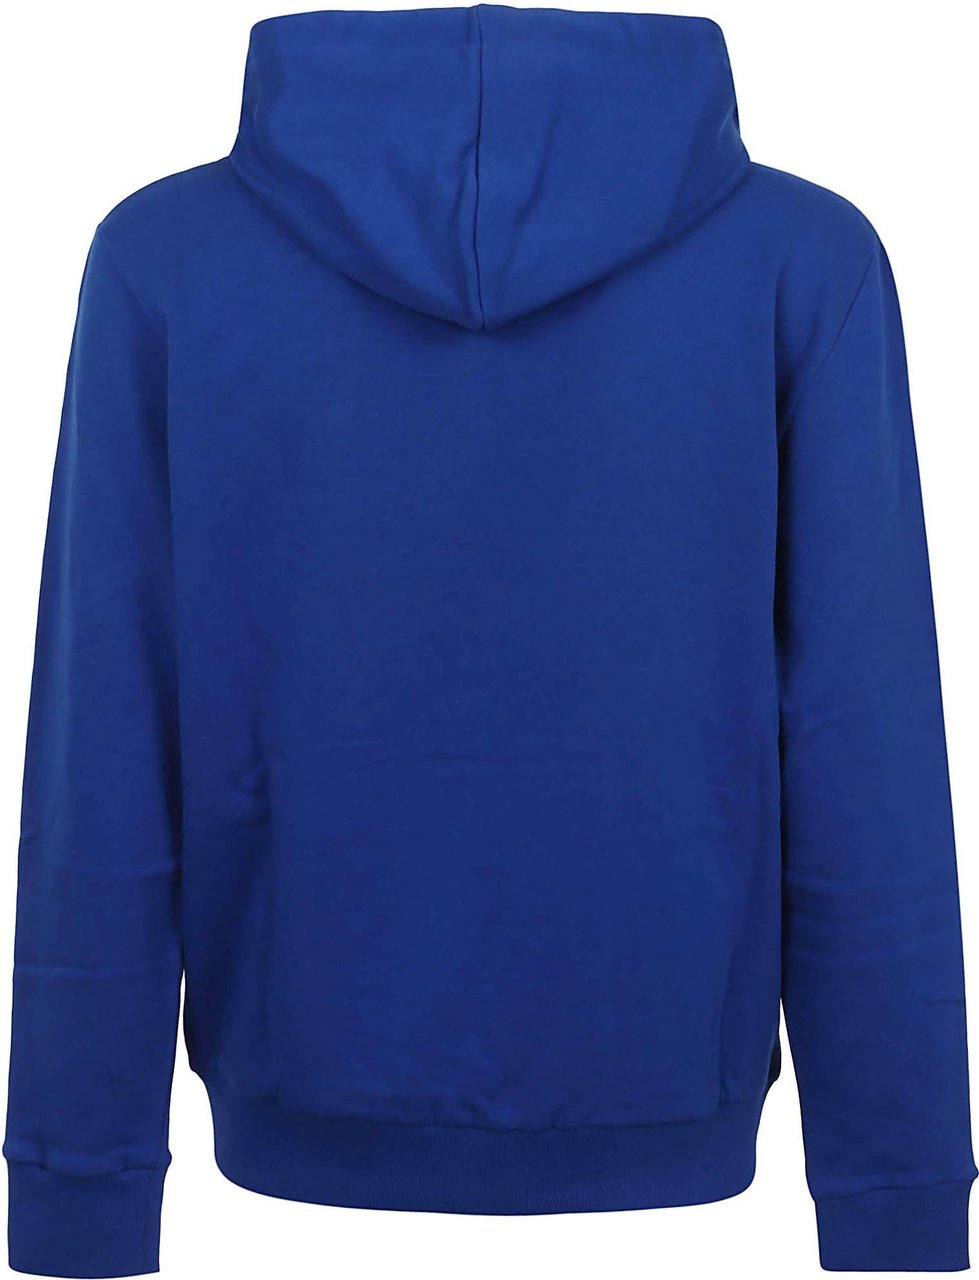 Balmain balmain printed hoodie Blauw